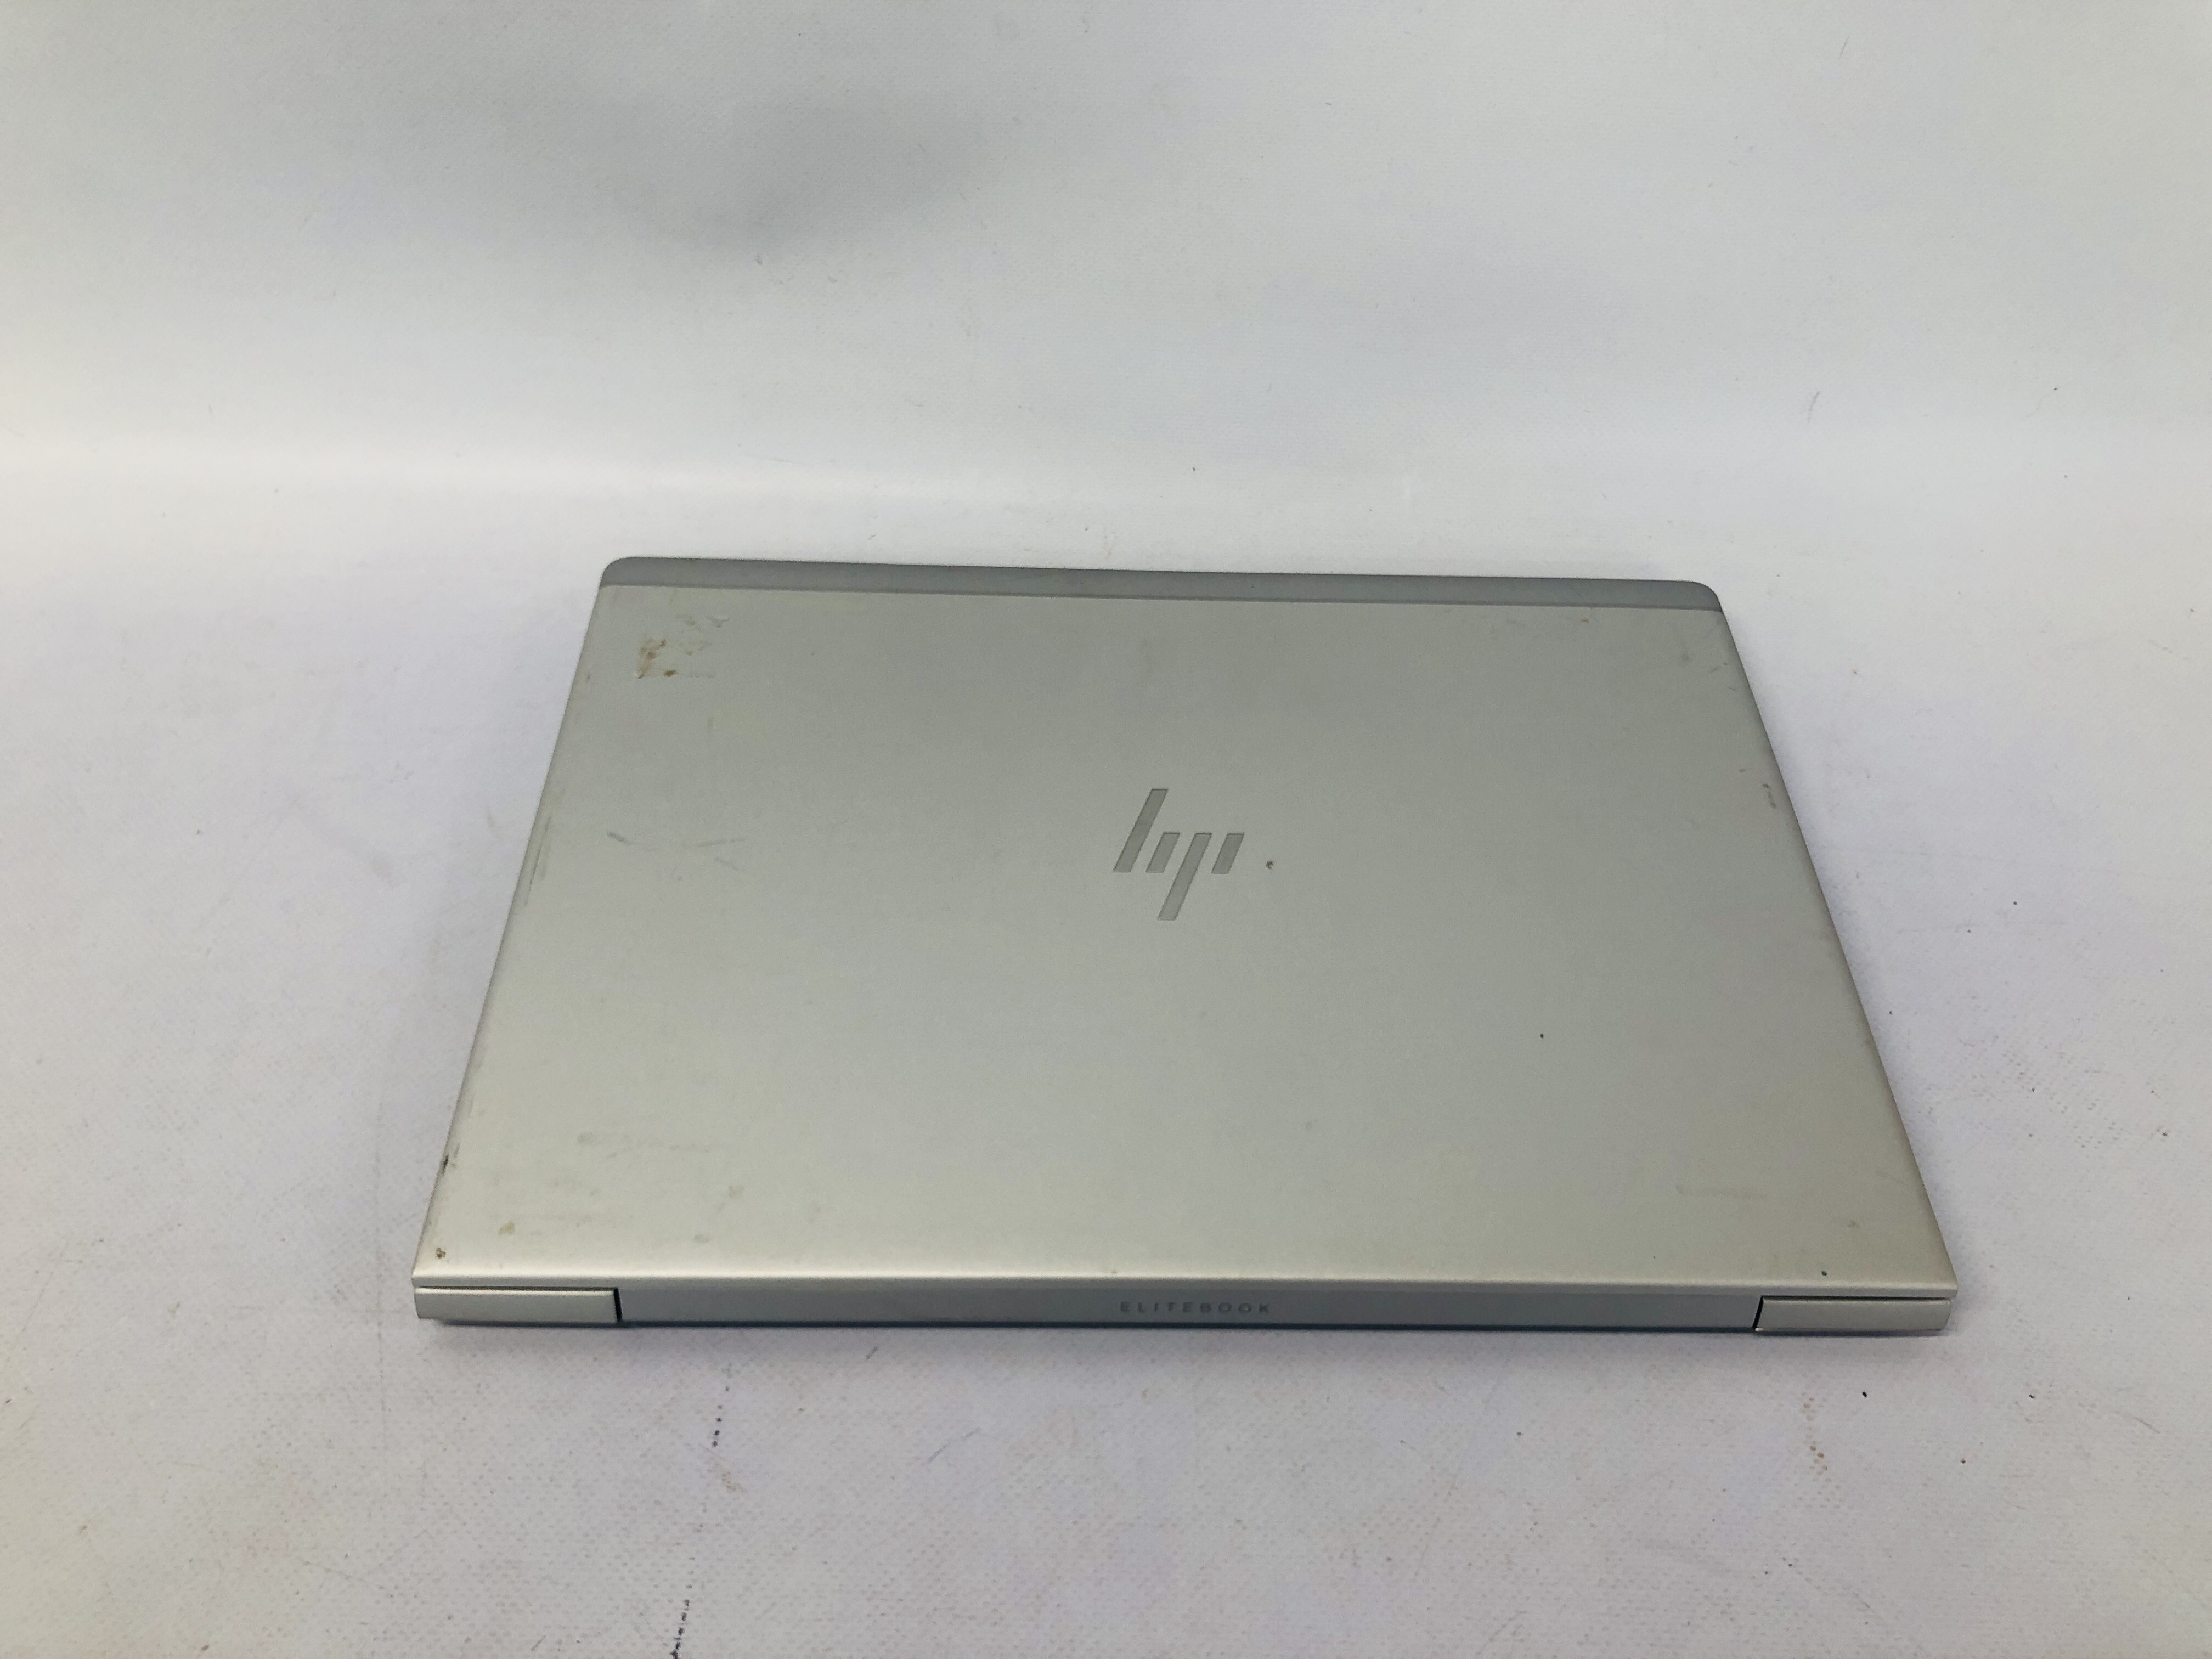 HP ELITEBOOK LAPTOP COMPUTER MODEL 840 G5 CORE I5 WINDOWS 10 8TH GEN (S/N 5CG8522BGT) - SOLD AS - Image 4 of 4